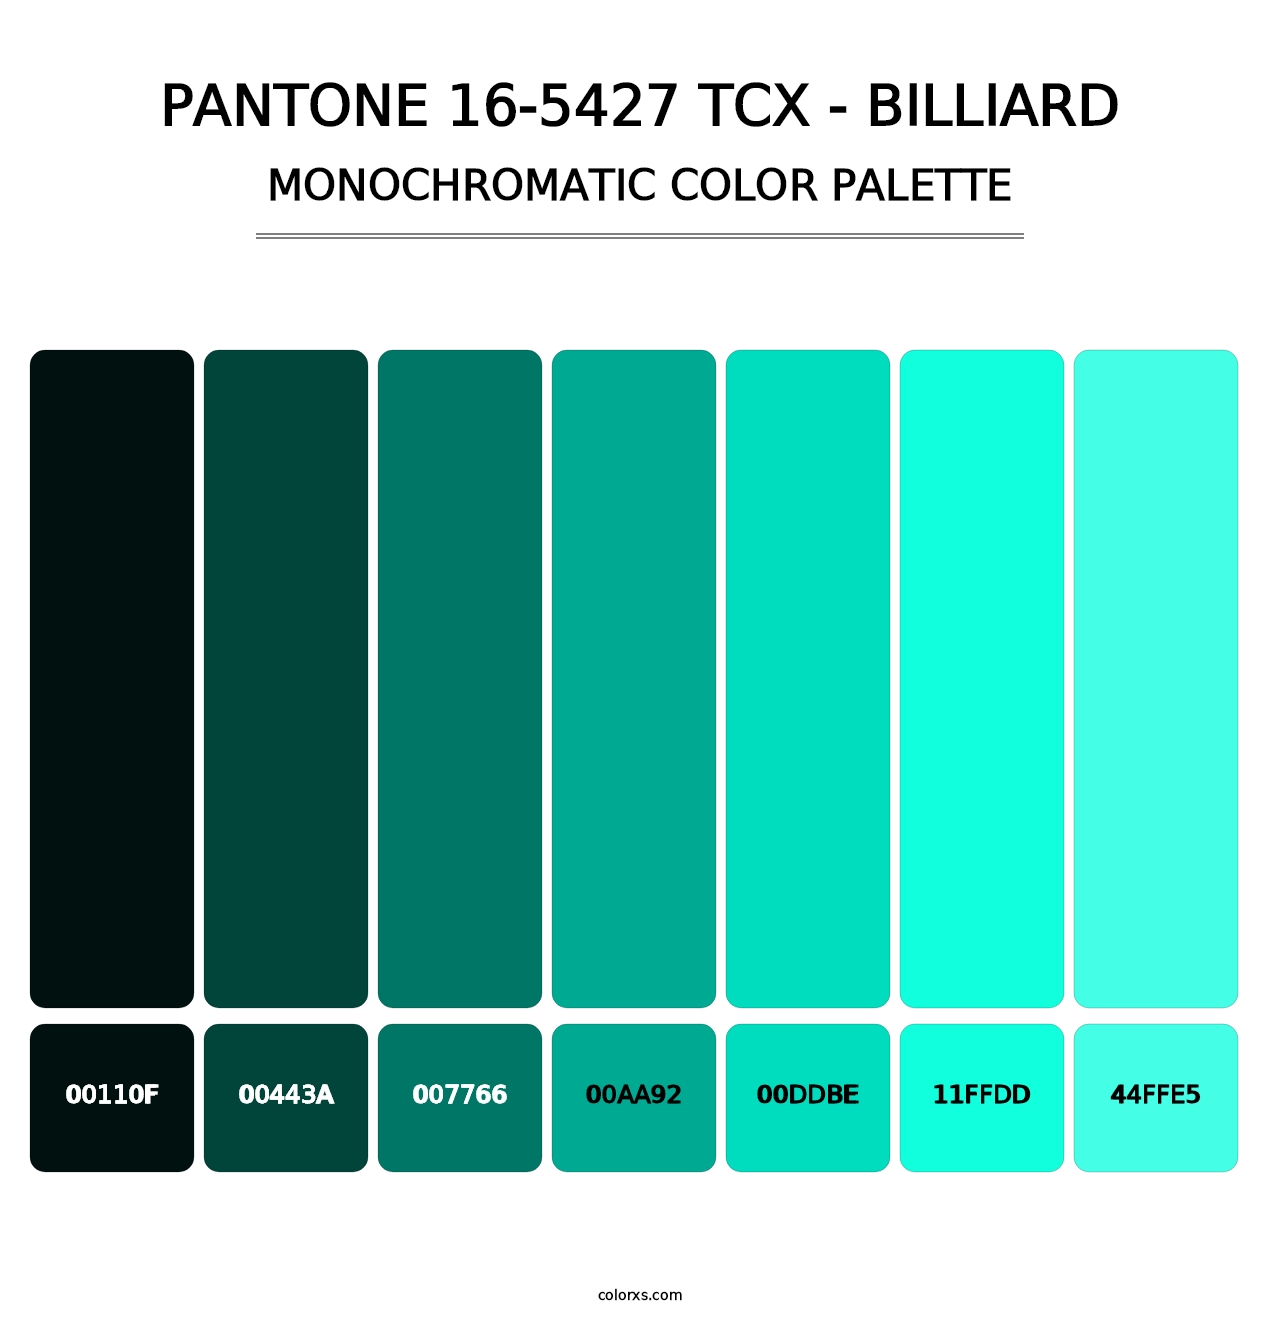 PANTONE 16-5427 TCX - Billiard - Monochromatic Color Palette